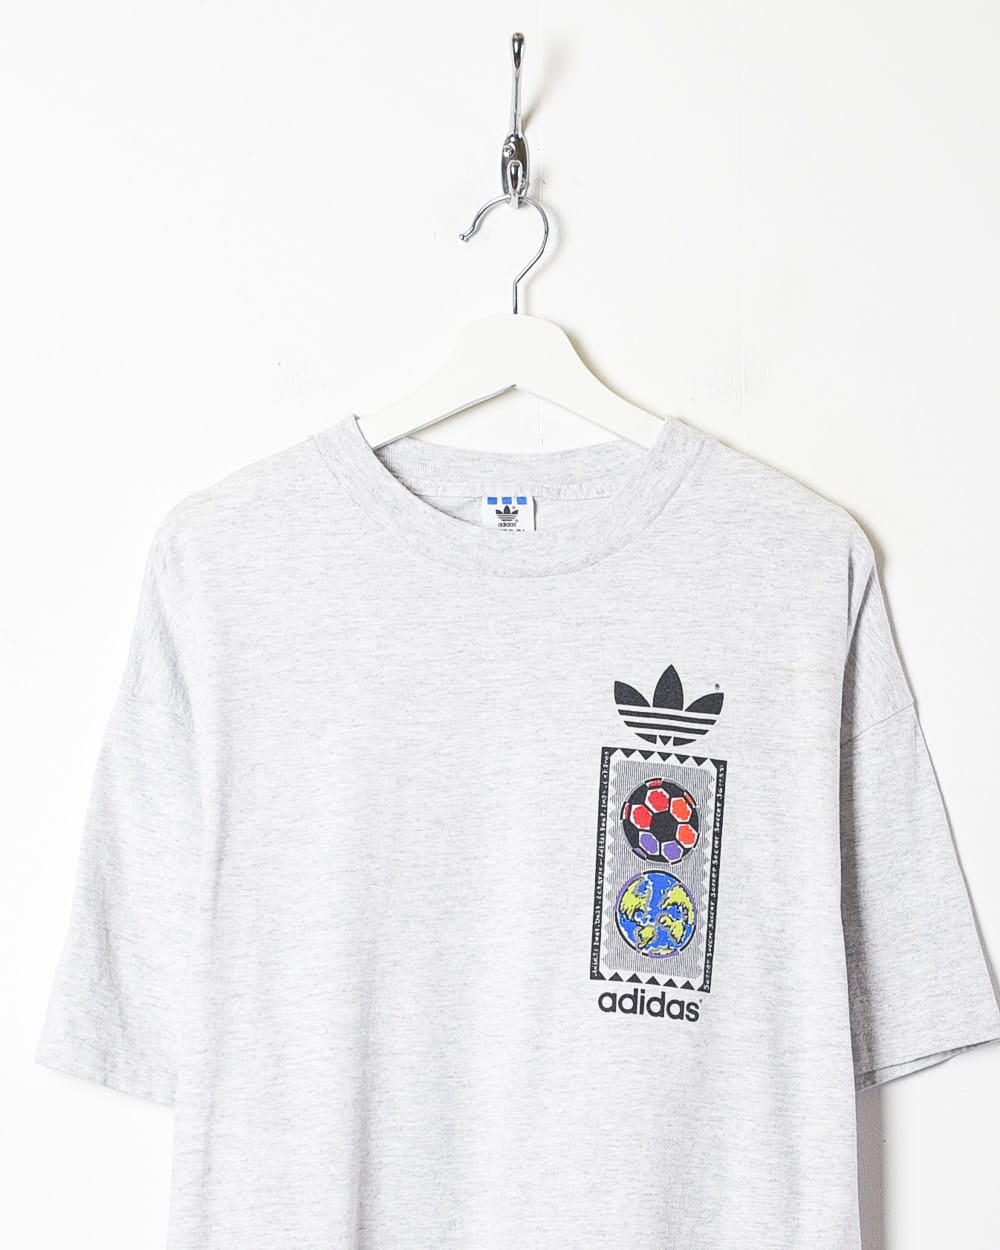 Stone Adidas Football T-Shirt - X-Large